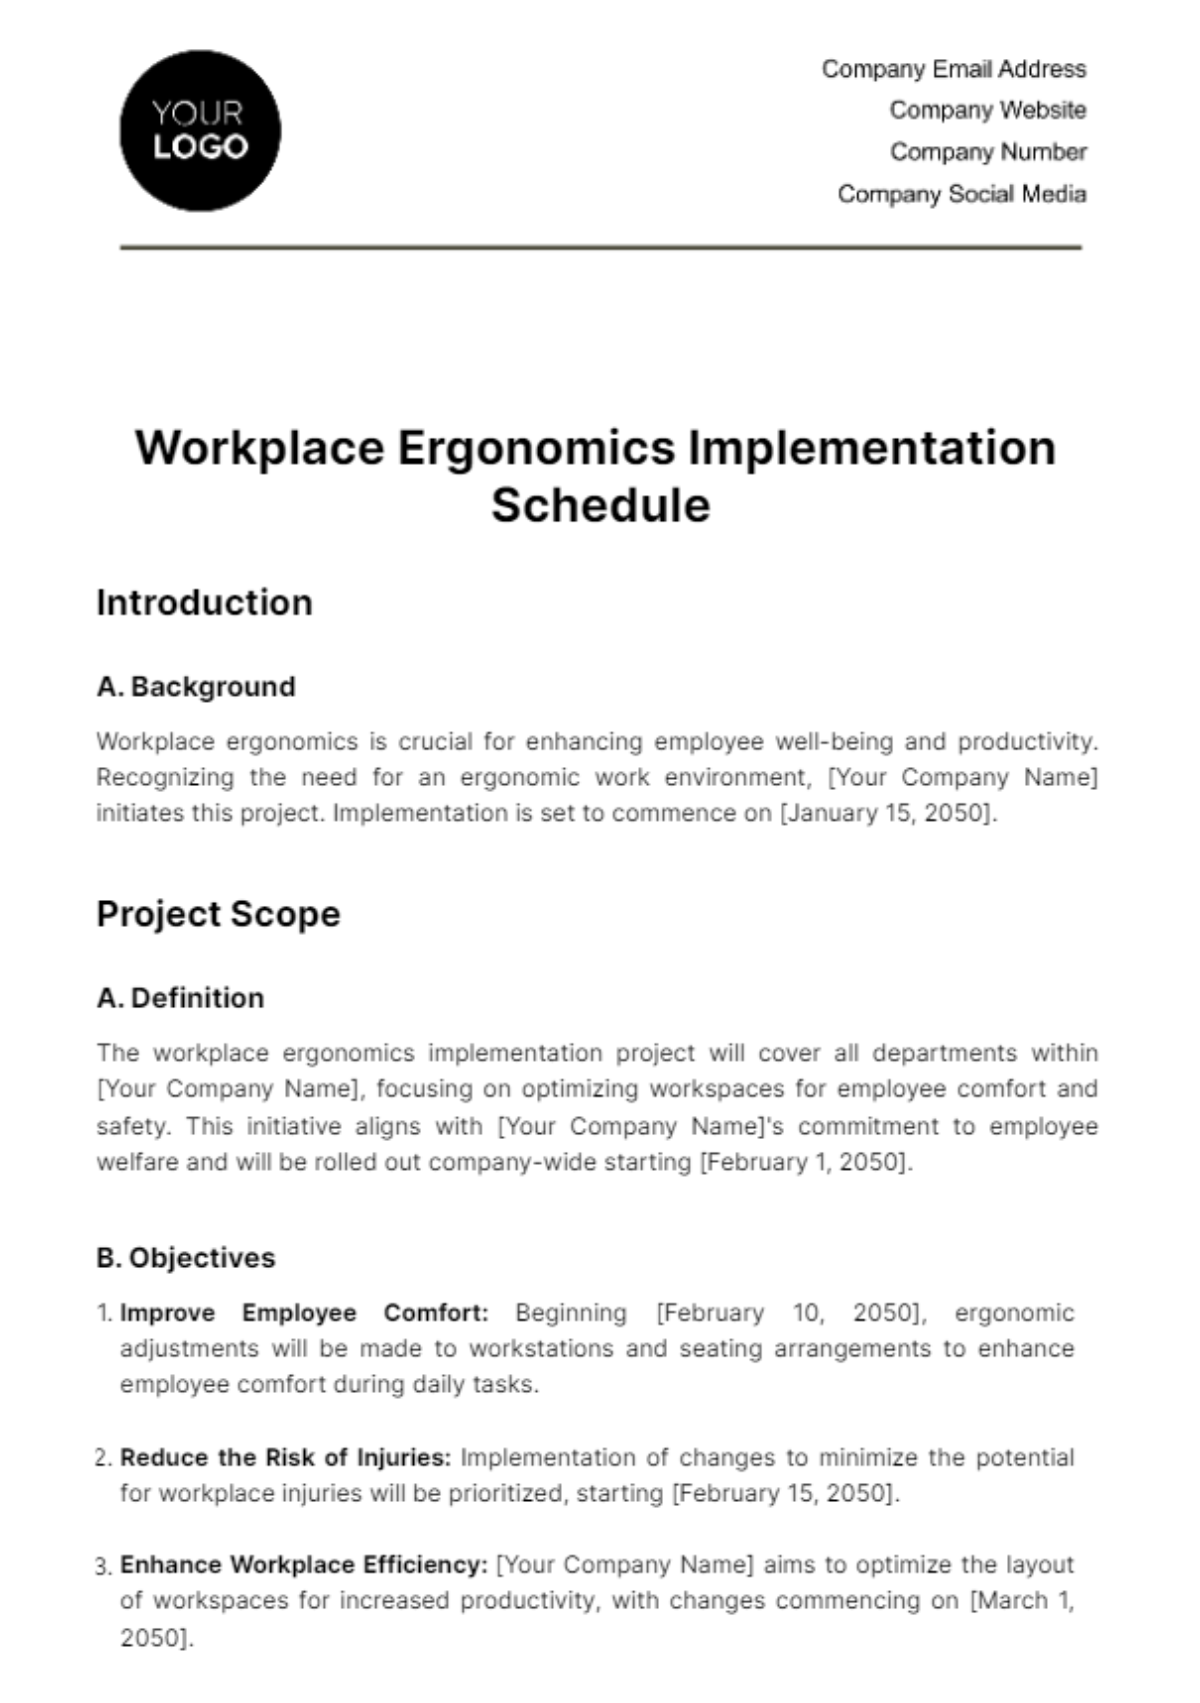 Free Workplace Ergonomics Implementation Schedule Template